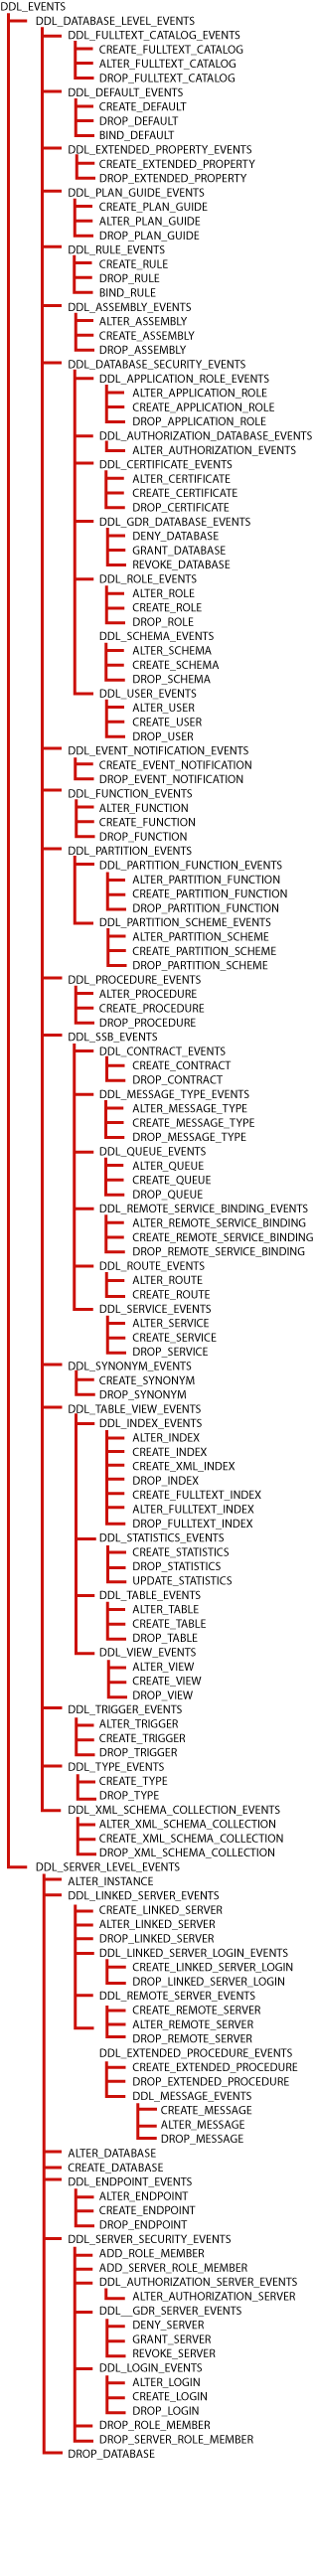 Árbol de eventos del proveedor WMI de eventos de servidor